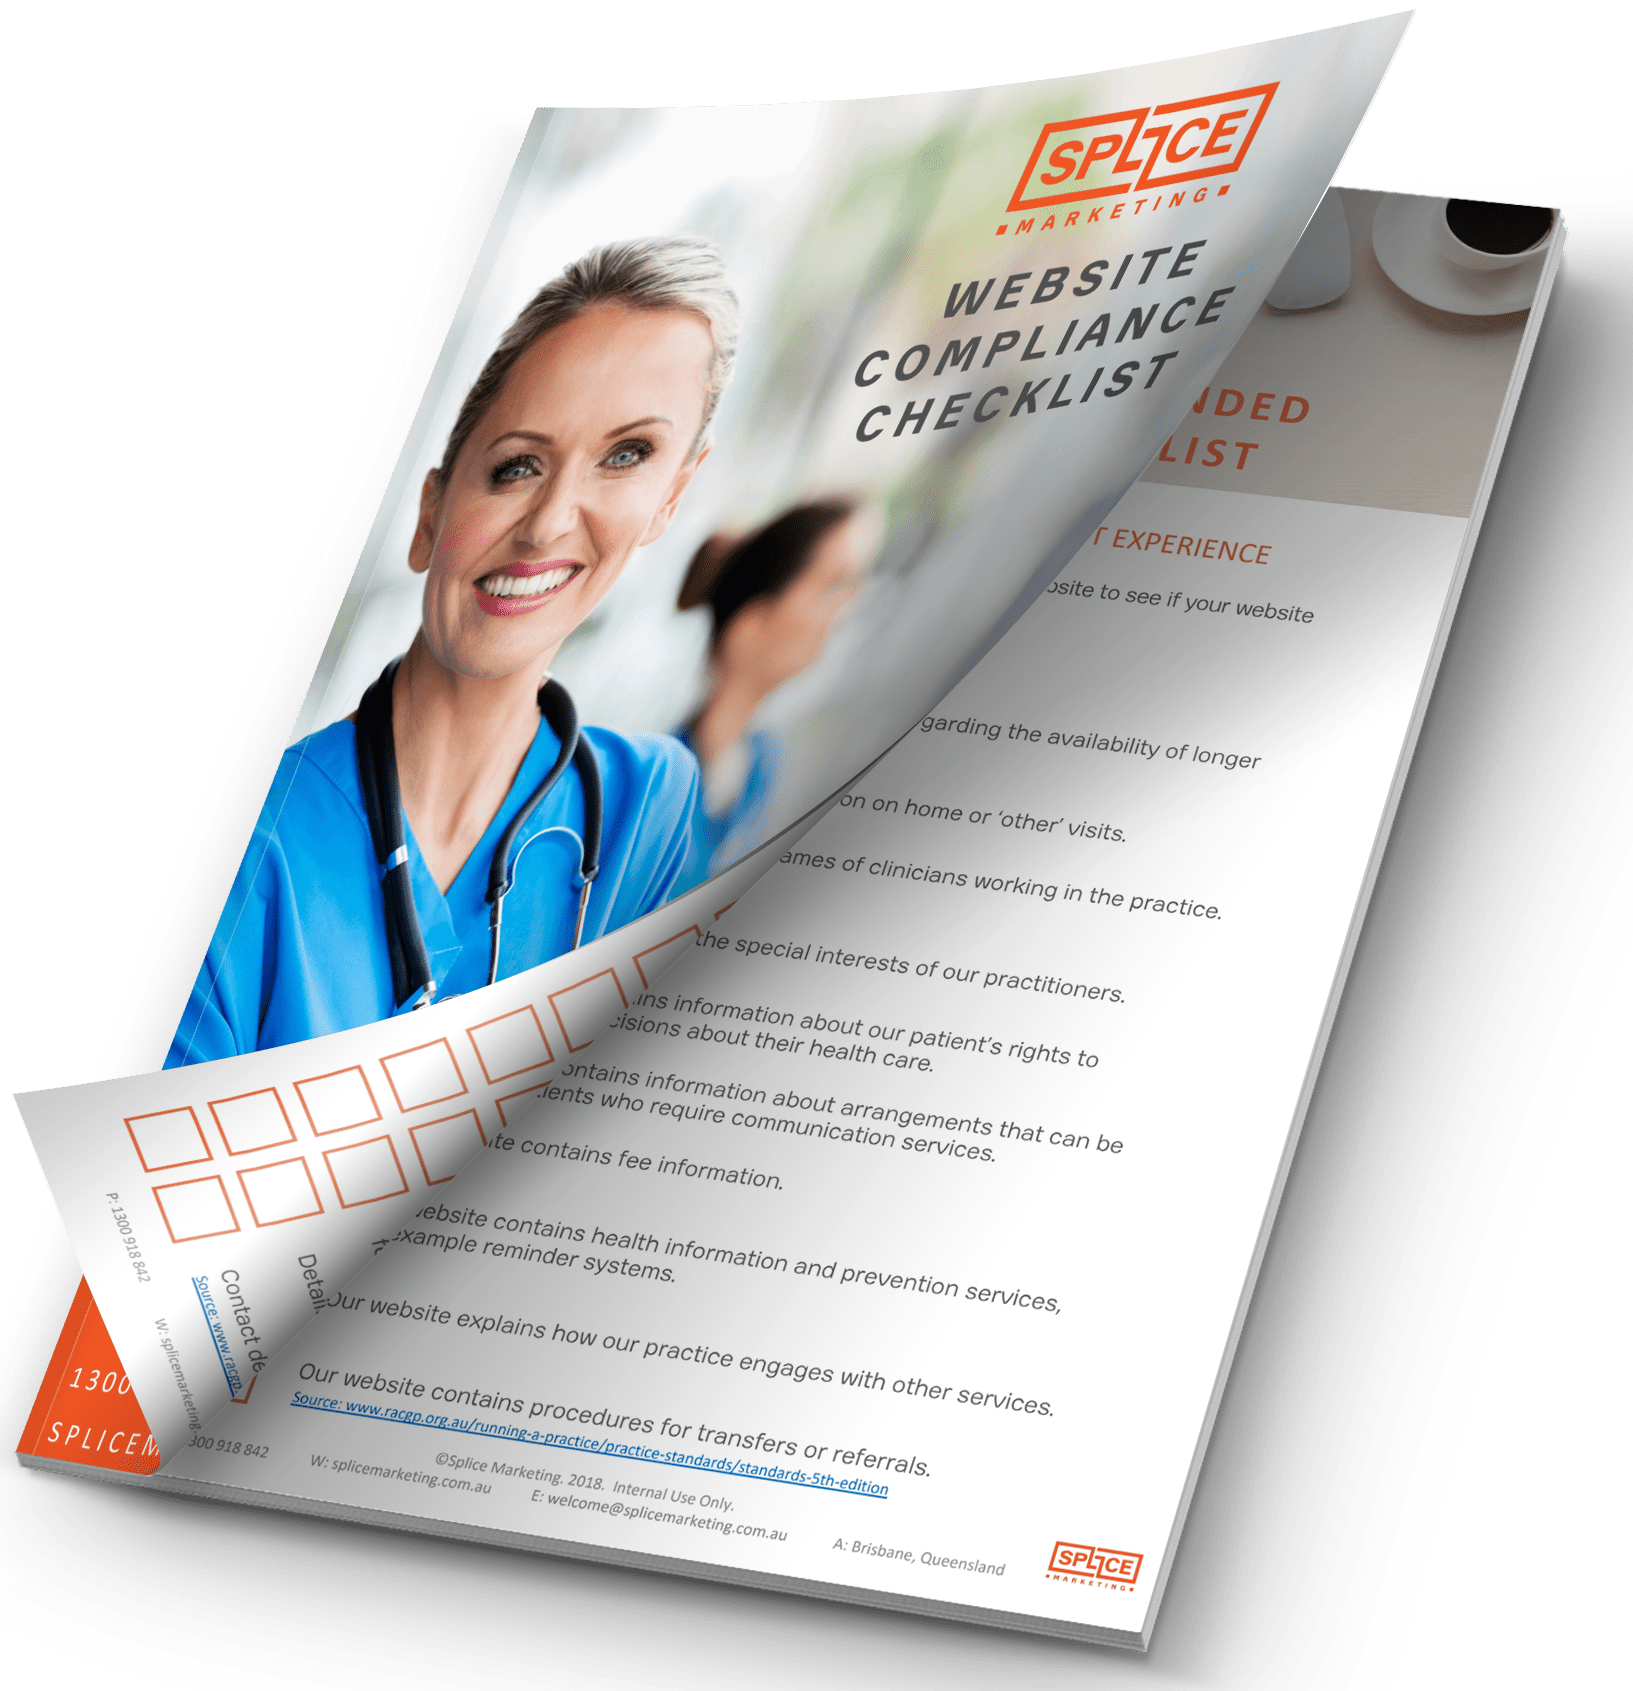 Splice ebook website compliance checklist for healthcare professionals